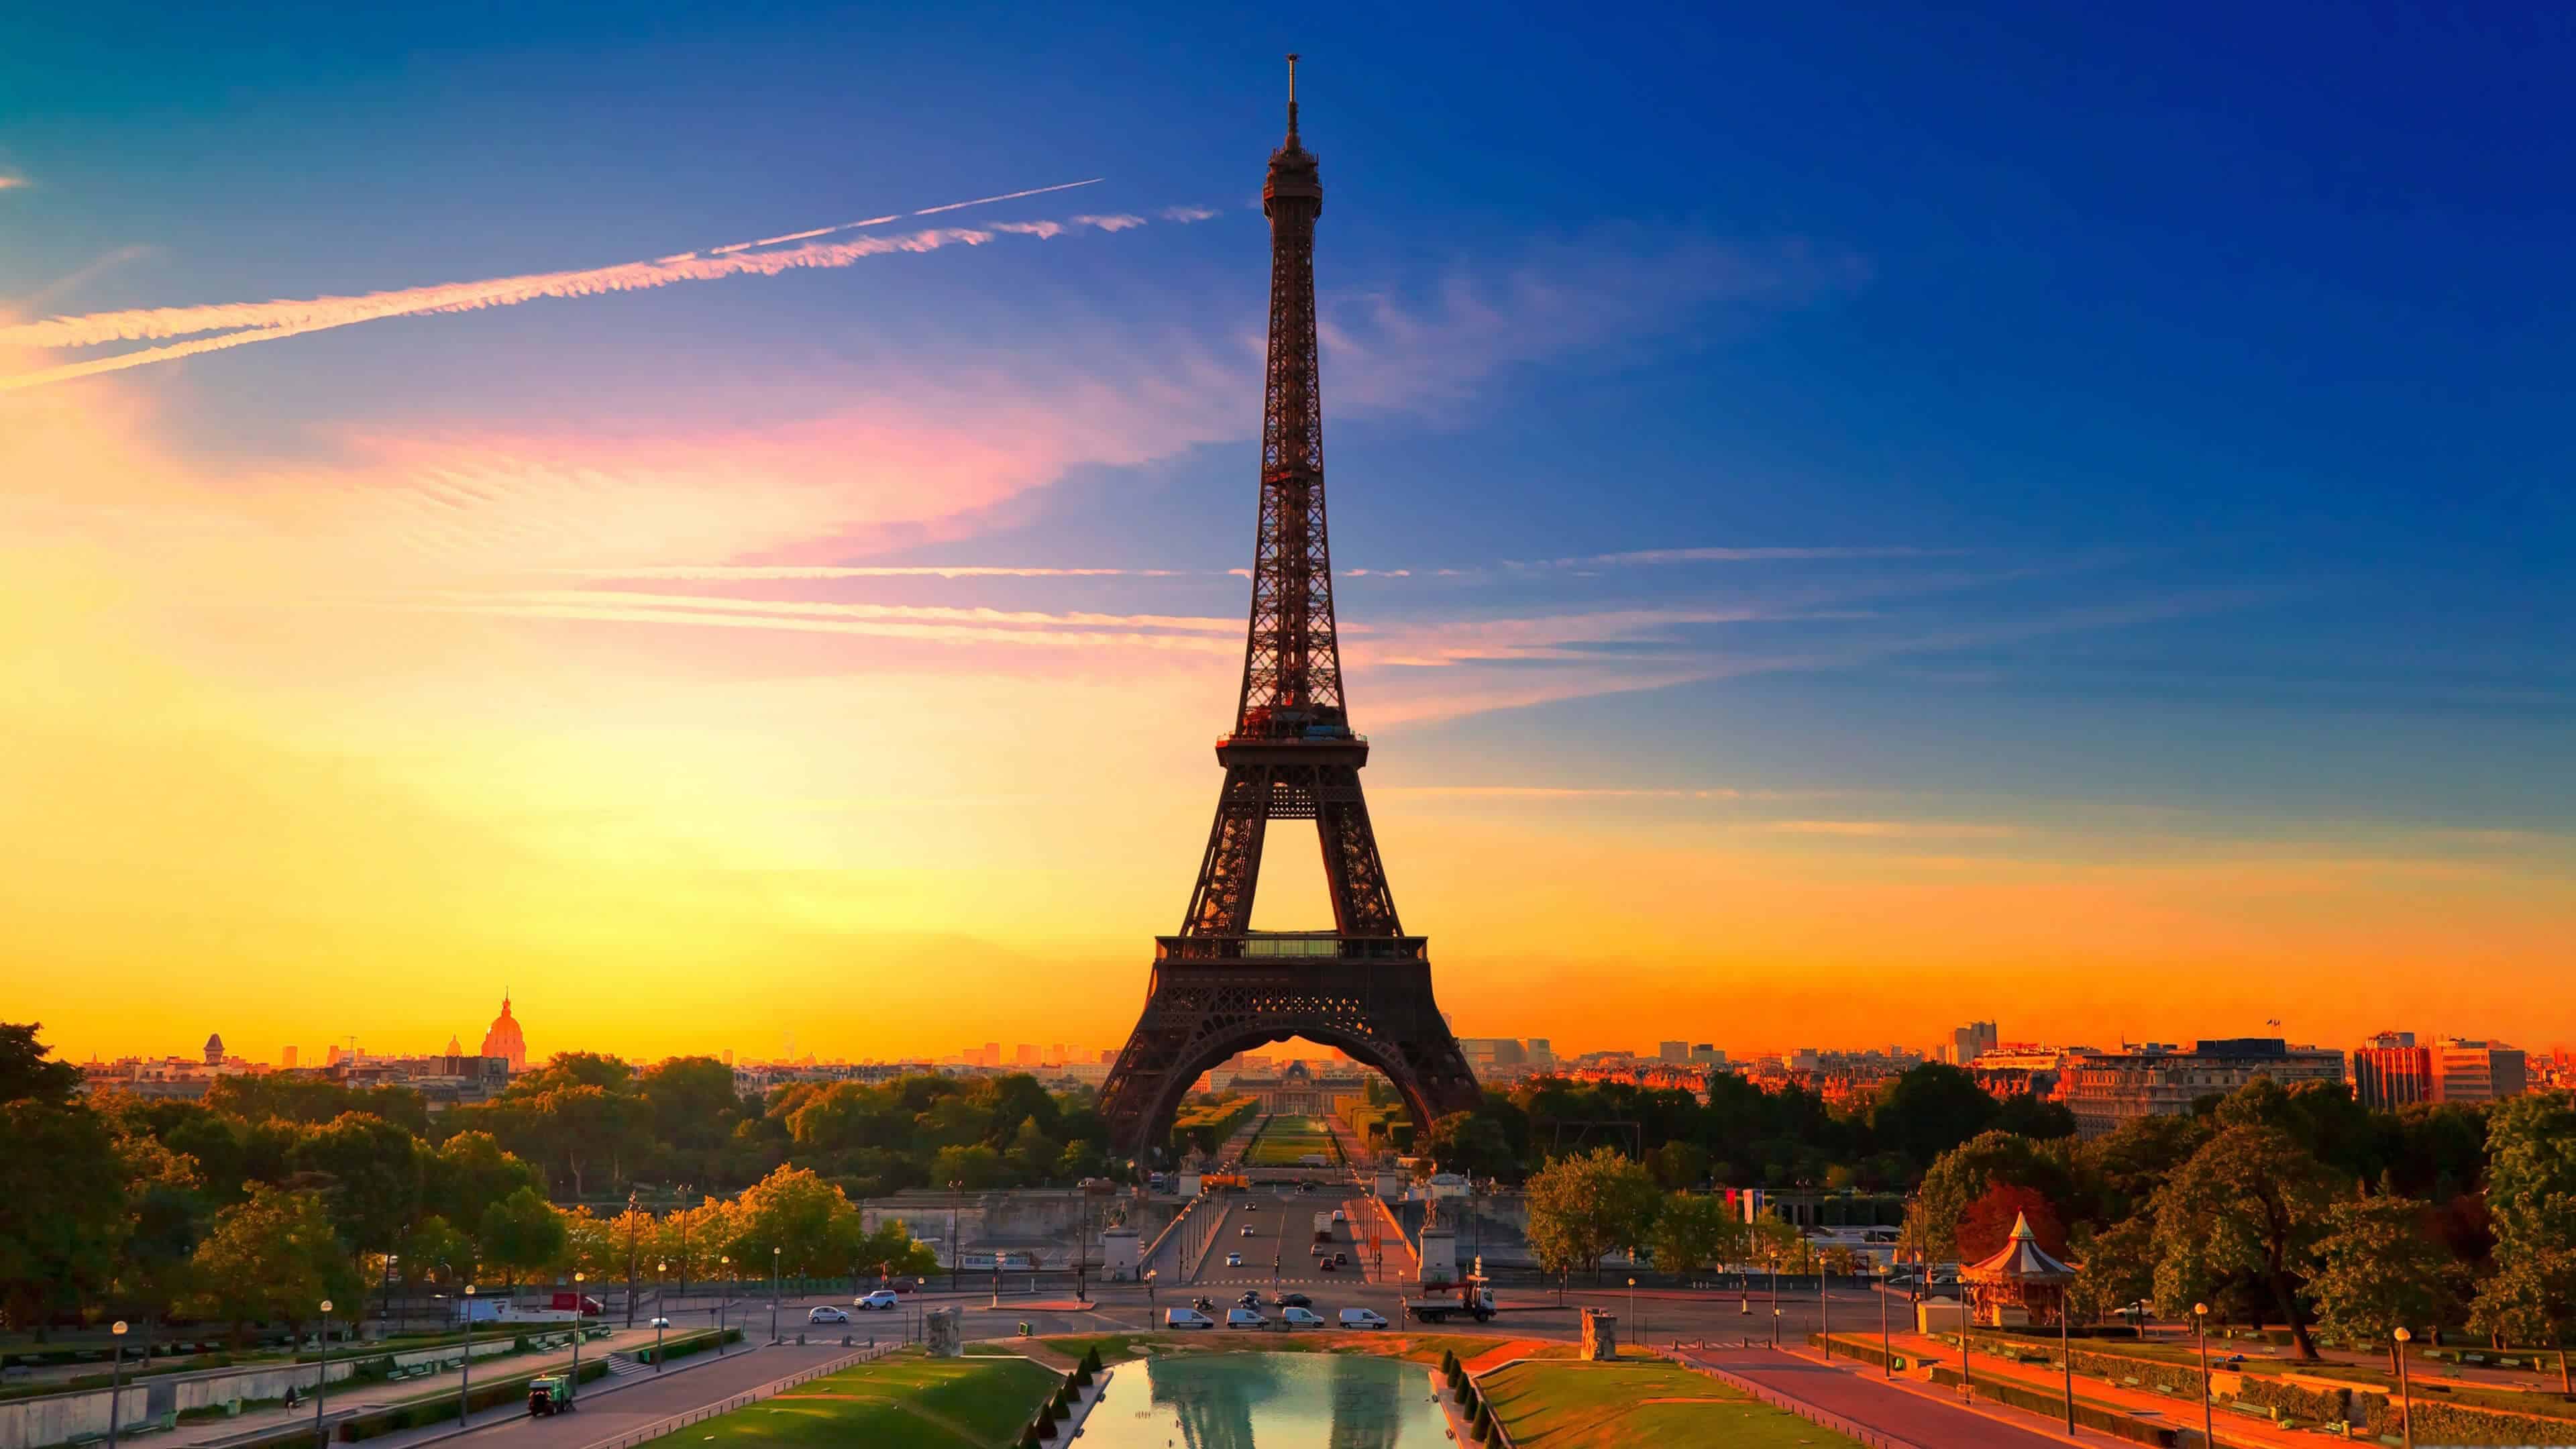 Eiffel Tower At Sunset Paris France UHD 4k Wallpaper